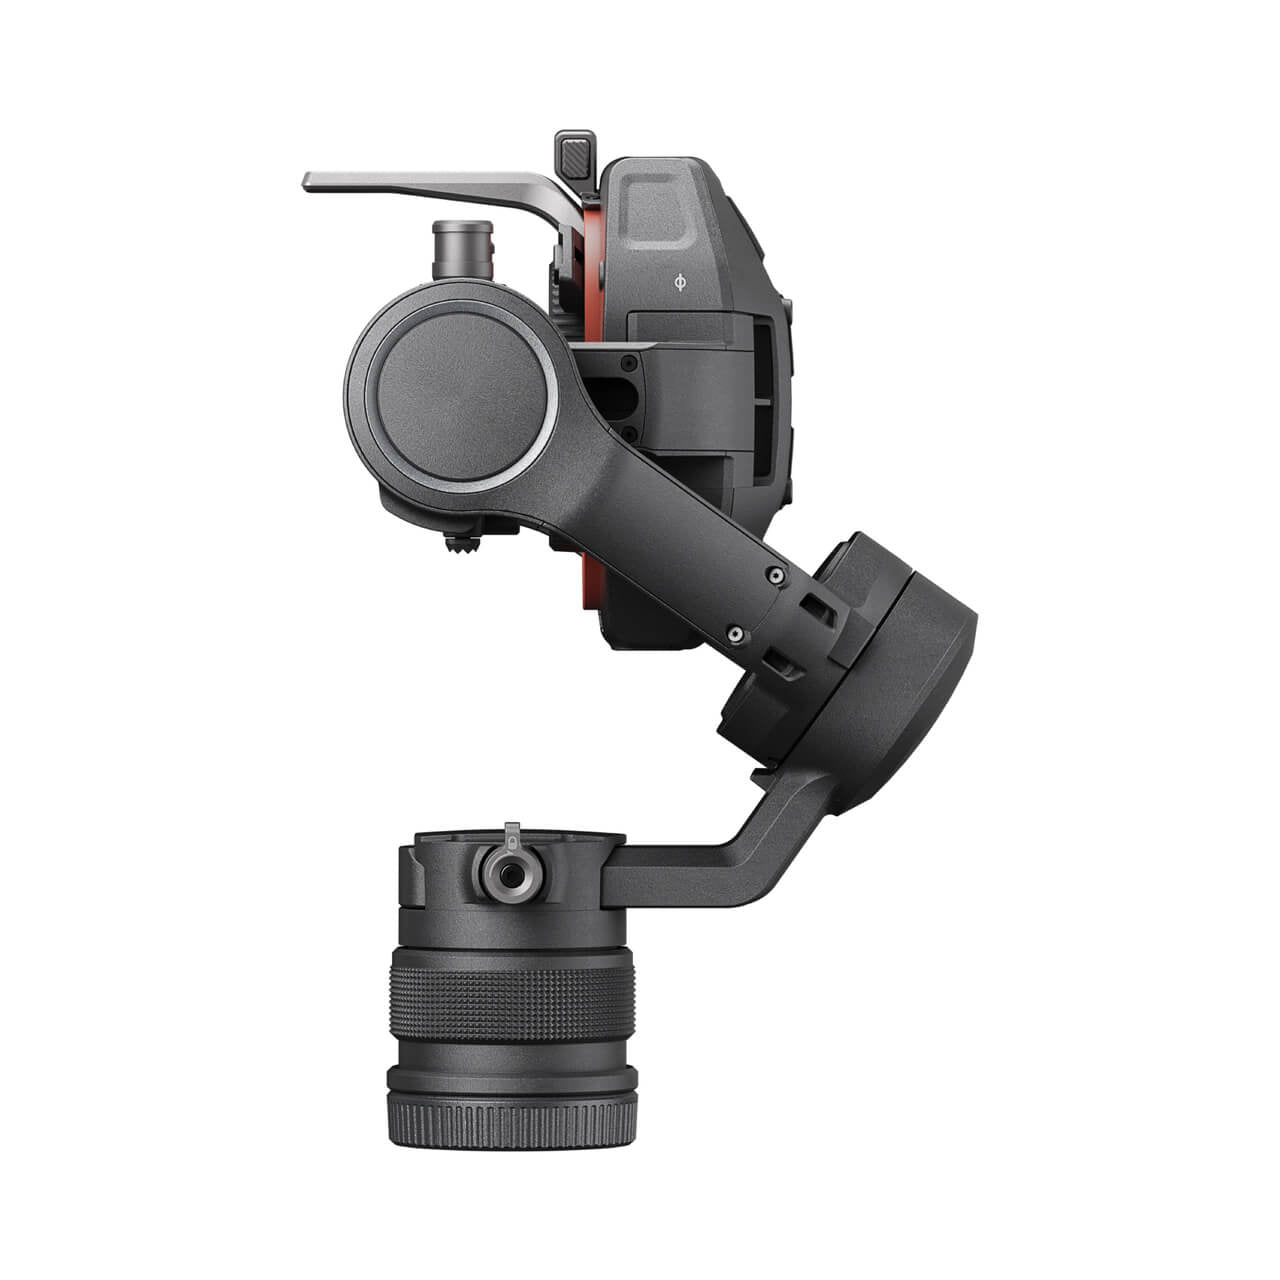 Zenmuse X9-8K Gimbal Camera - Premium Camera Gimbal from DJI - Just $4029! Shop now at Eagleview Drones